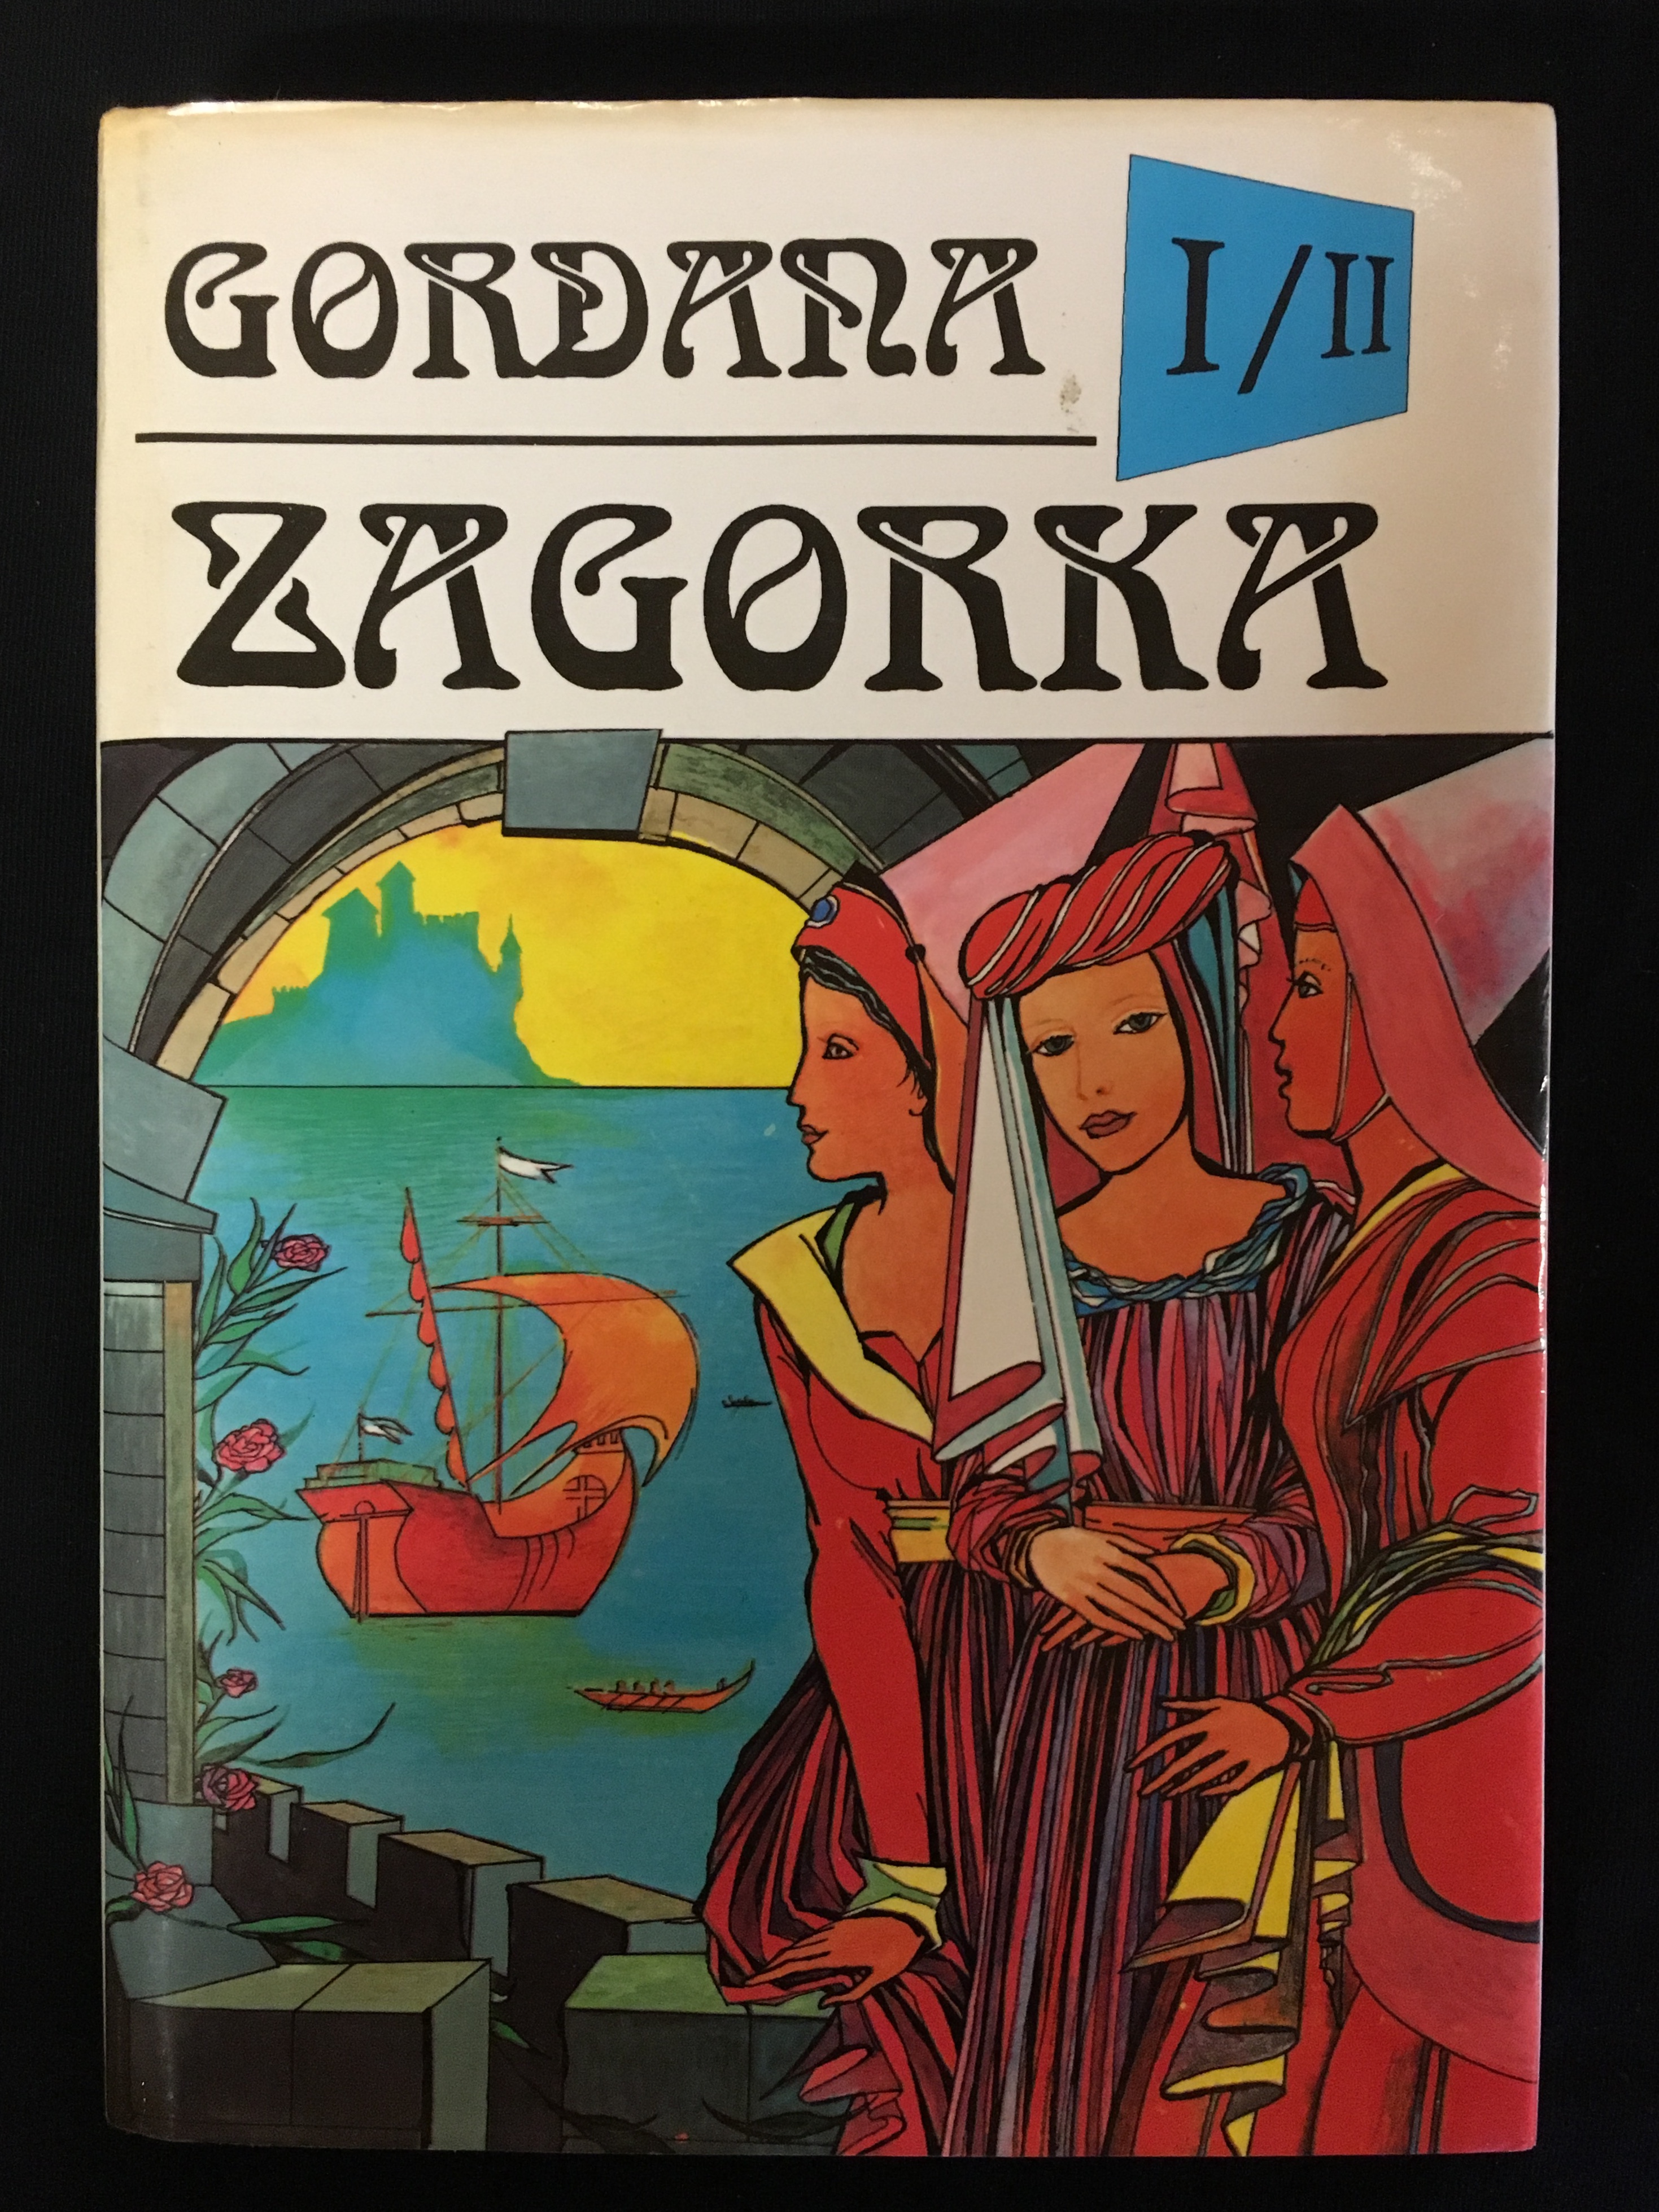 Gordana Zagorka I/II